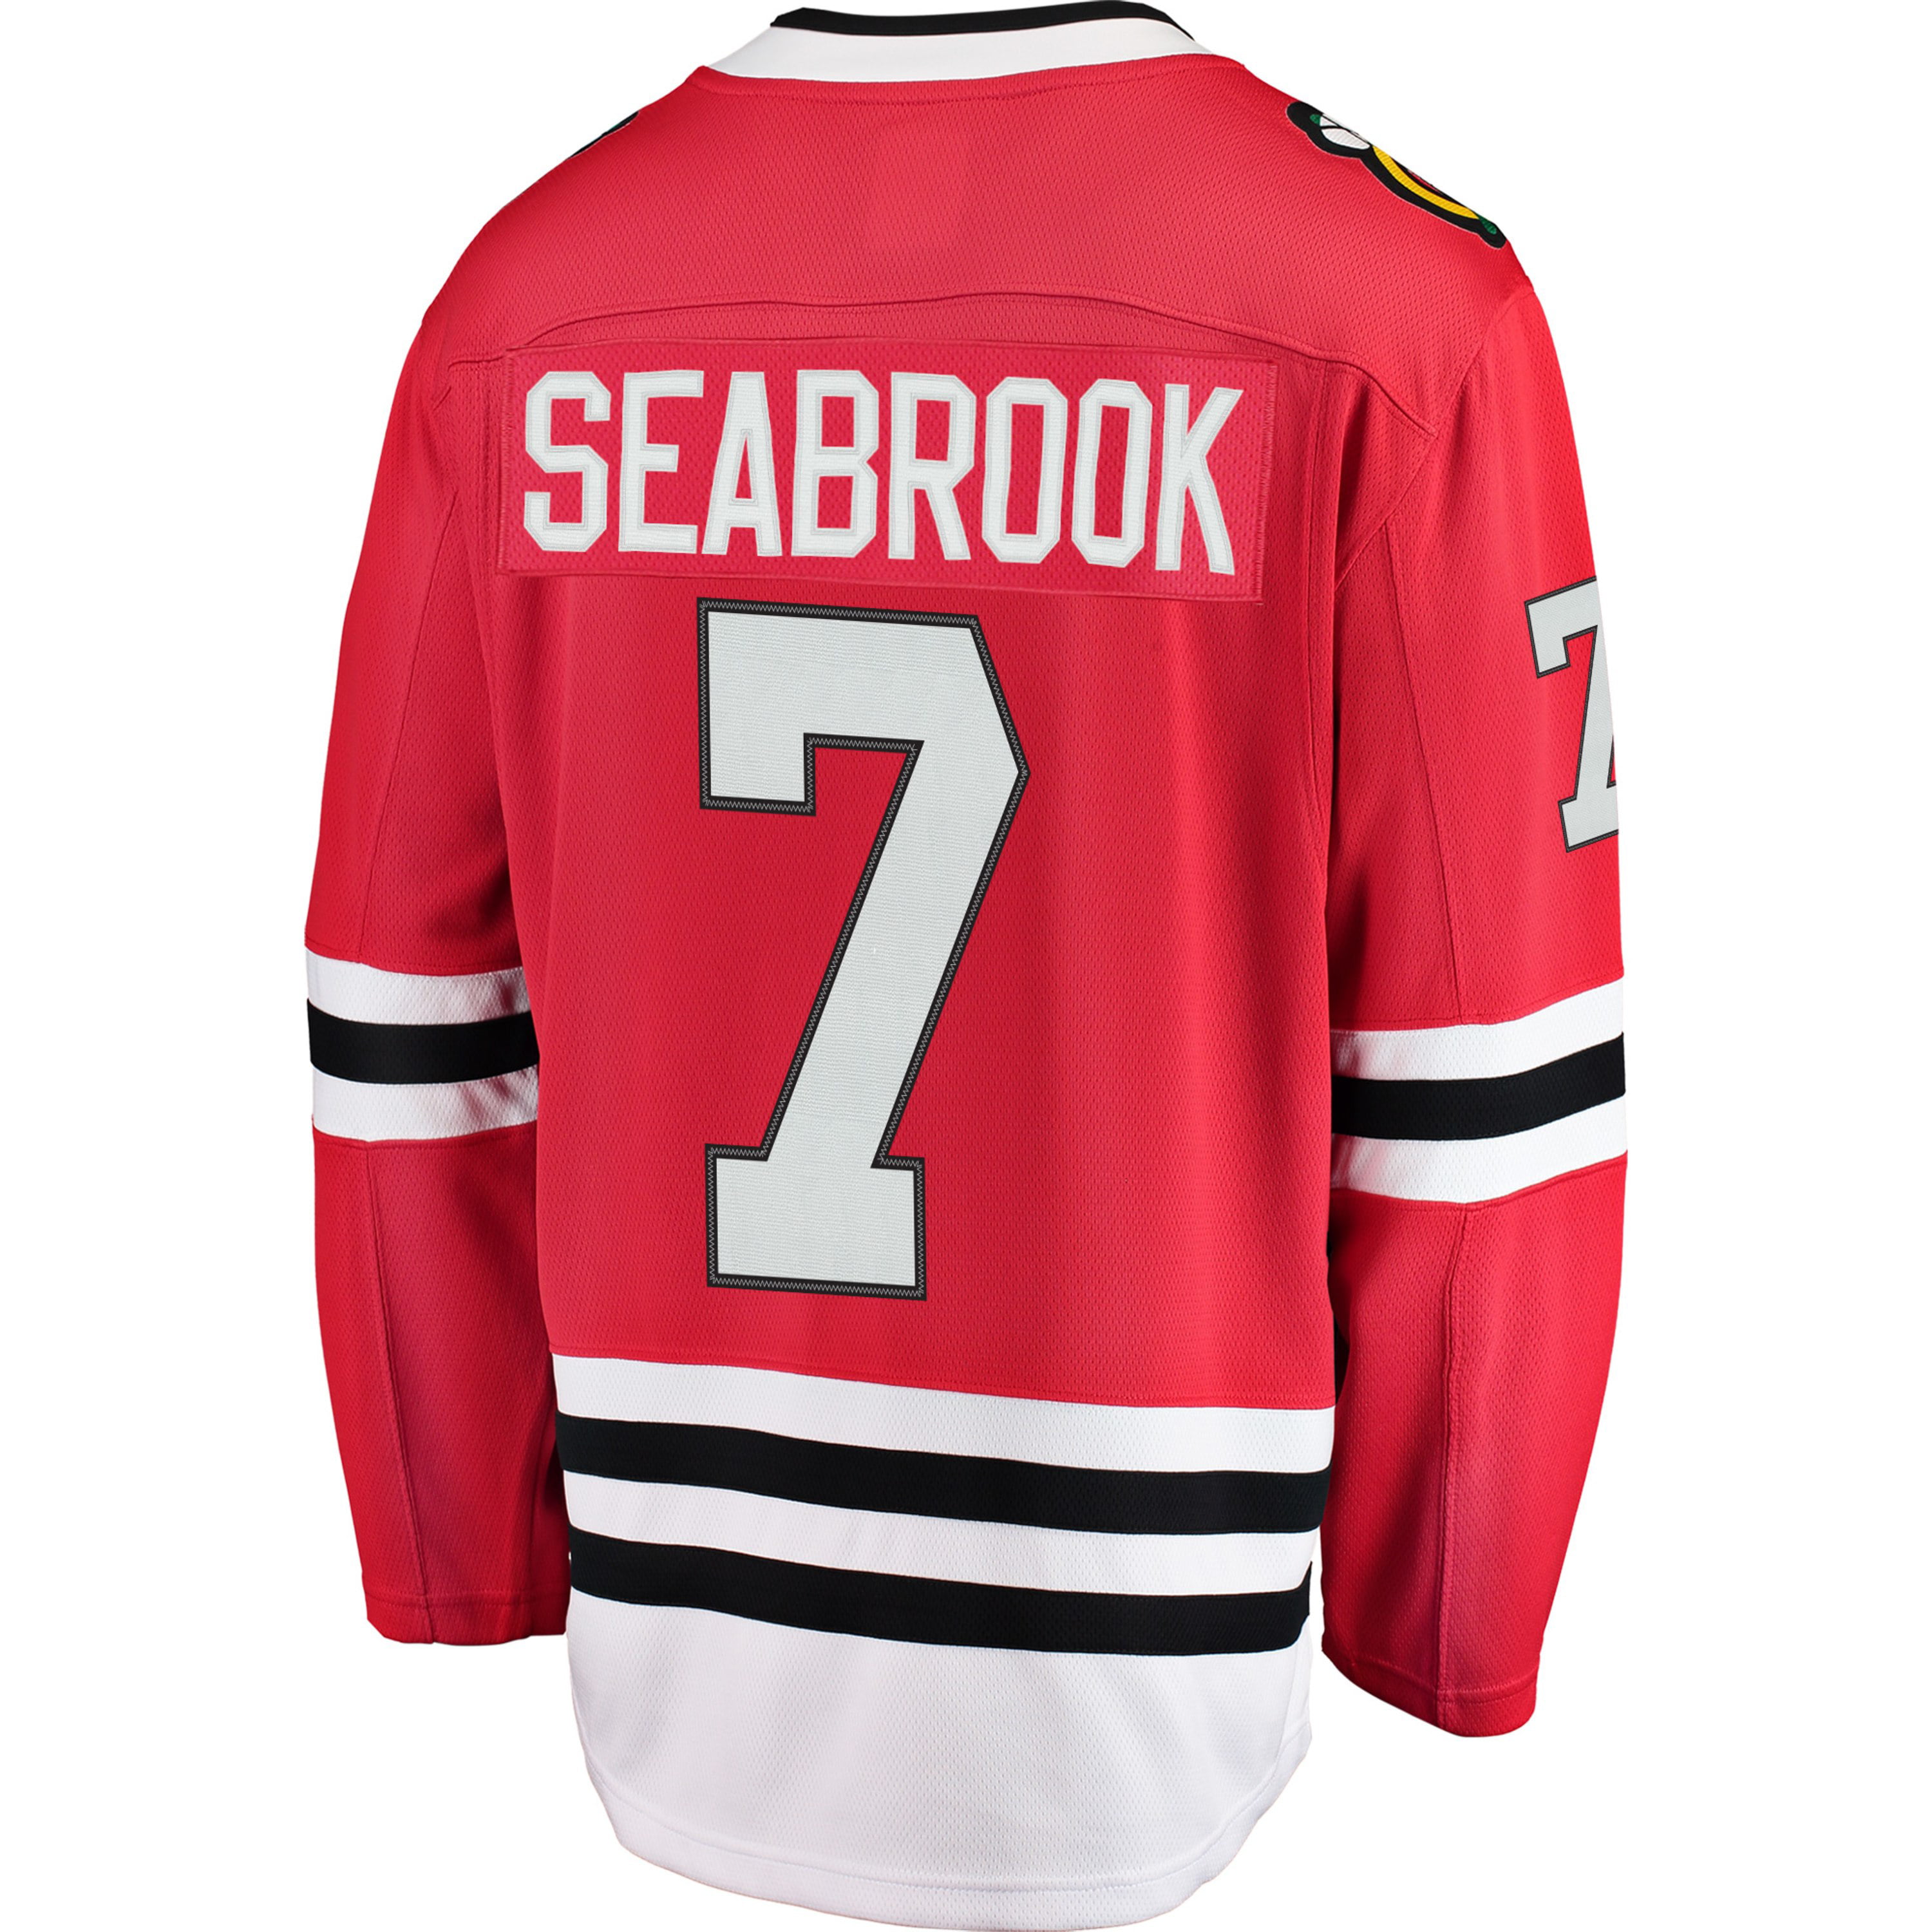 chicago blackhawks seabrook jersey